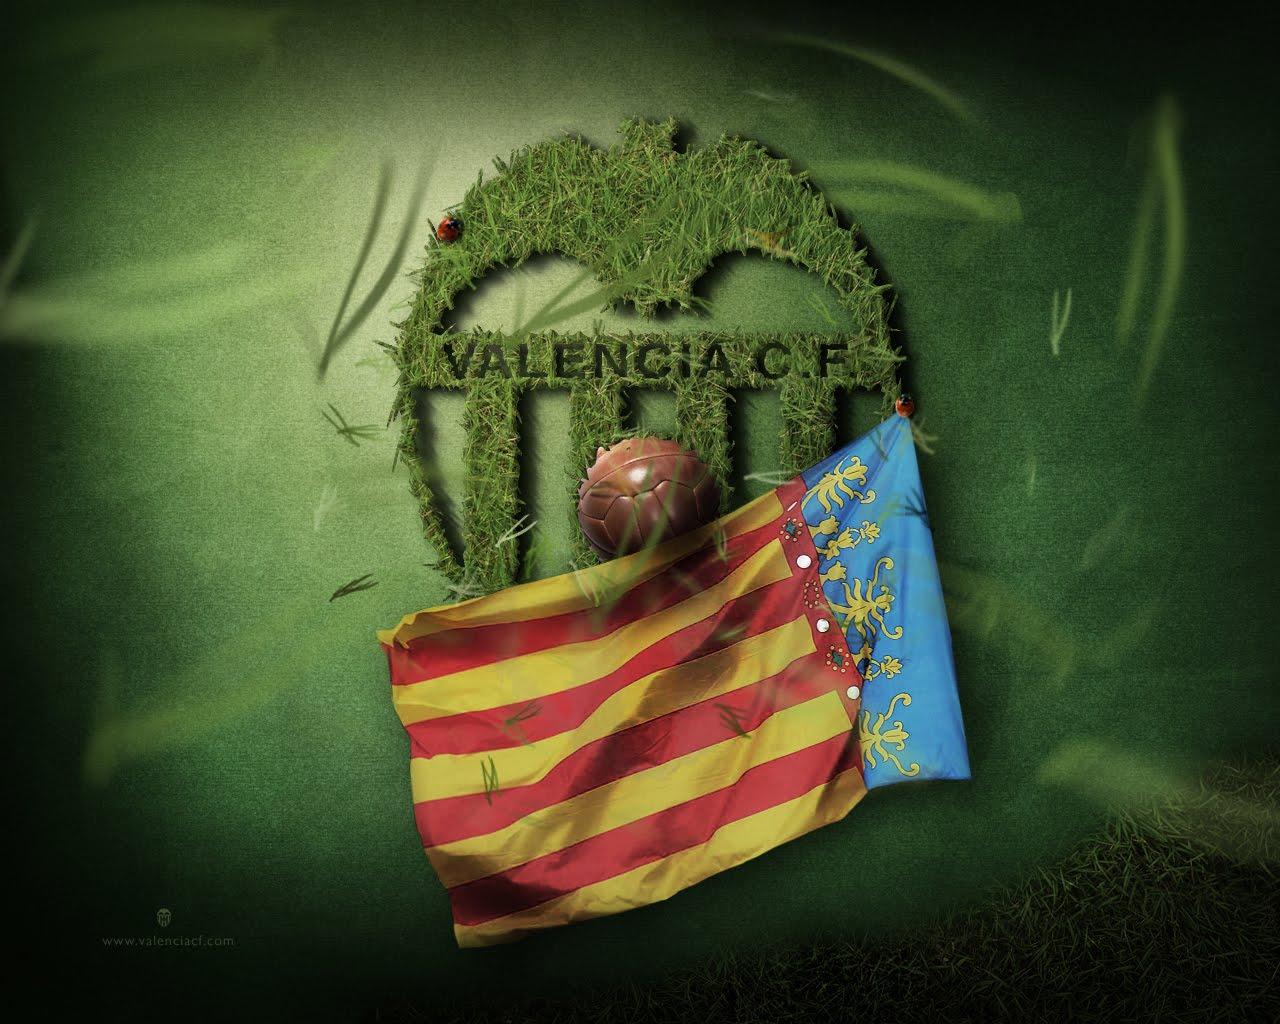 AMUNT VALENCIA. Valencia CF. Valencia and Football team